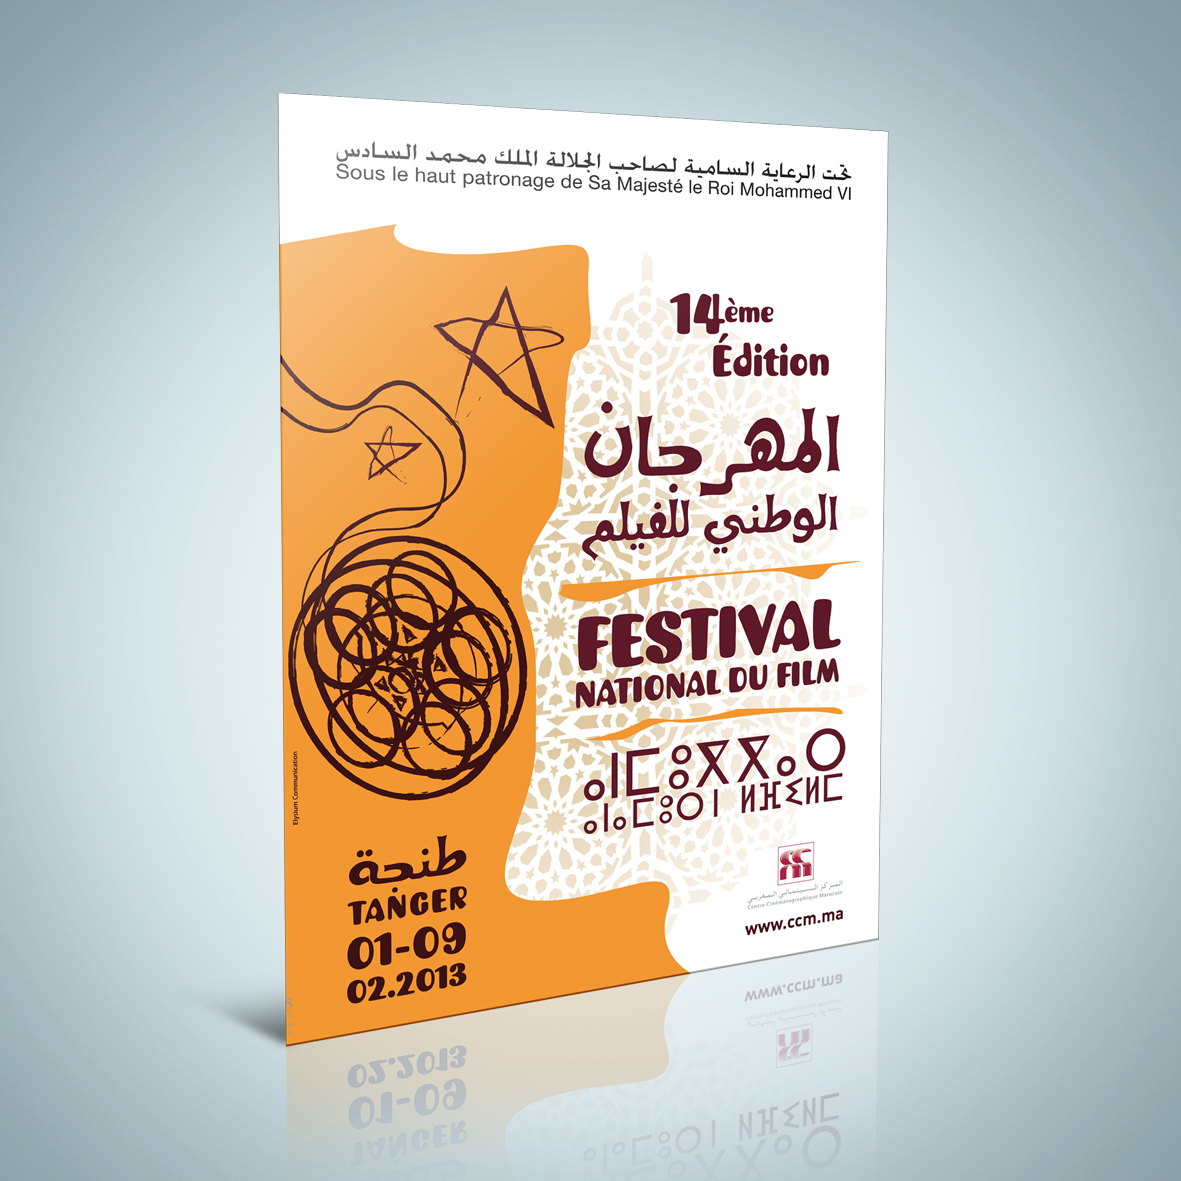 Visuel officiel du Festival National du film Tanger Maroc  